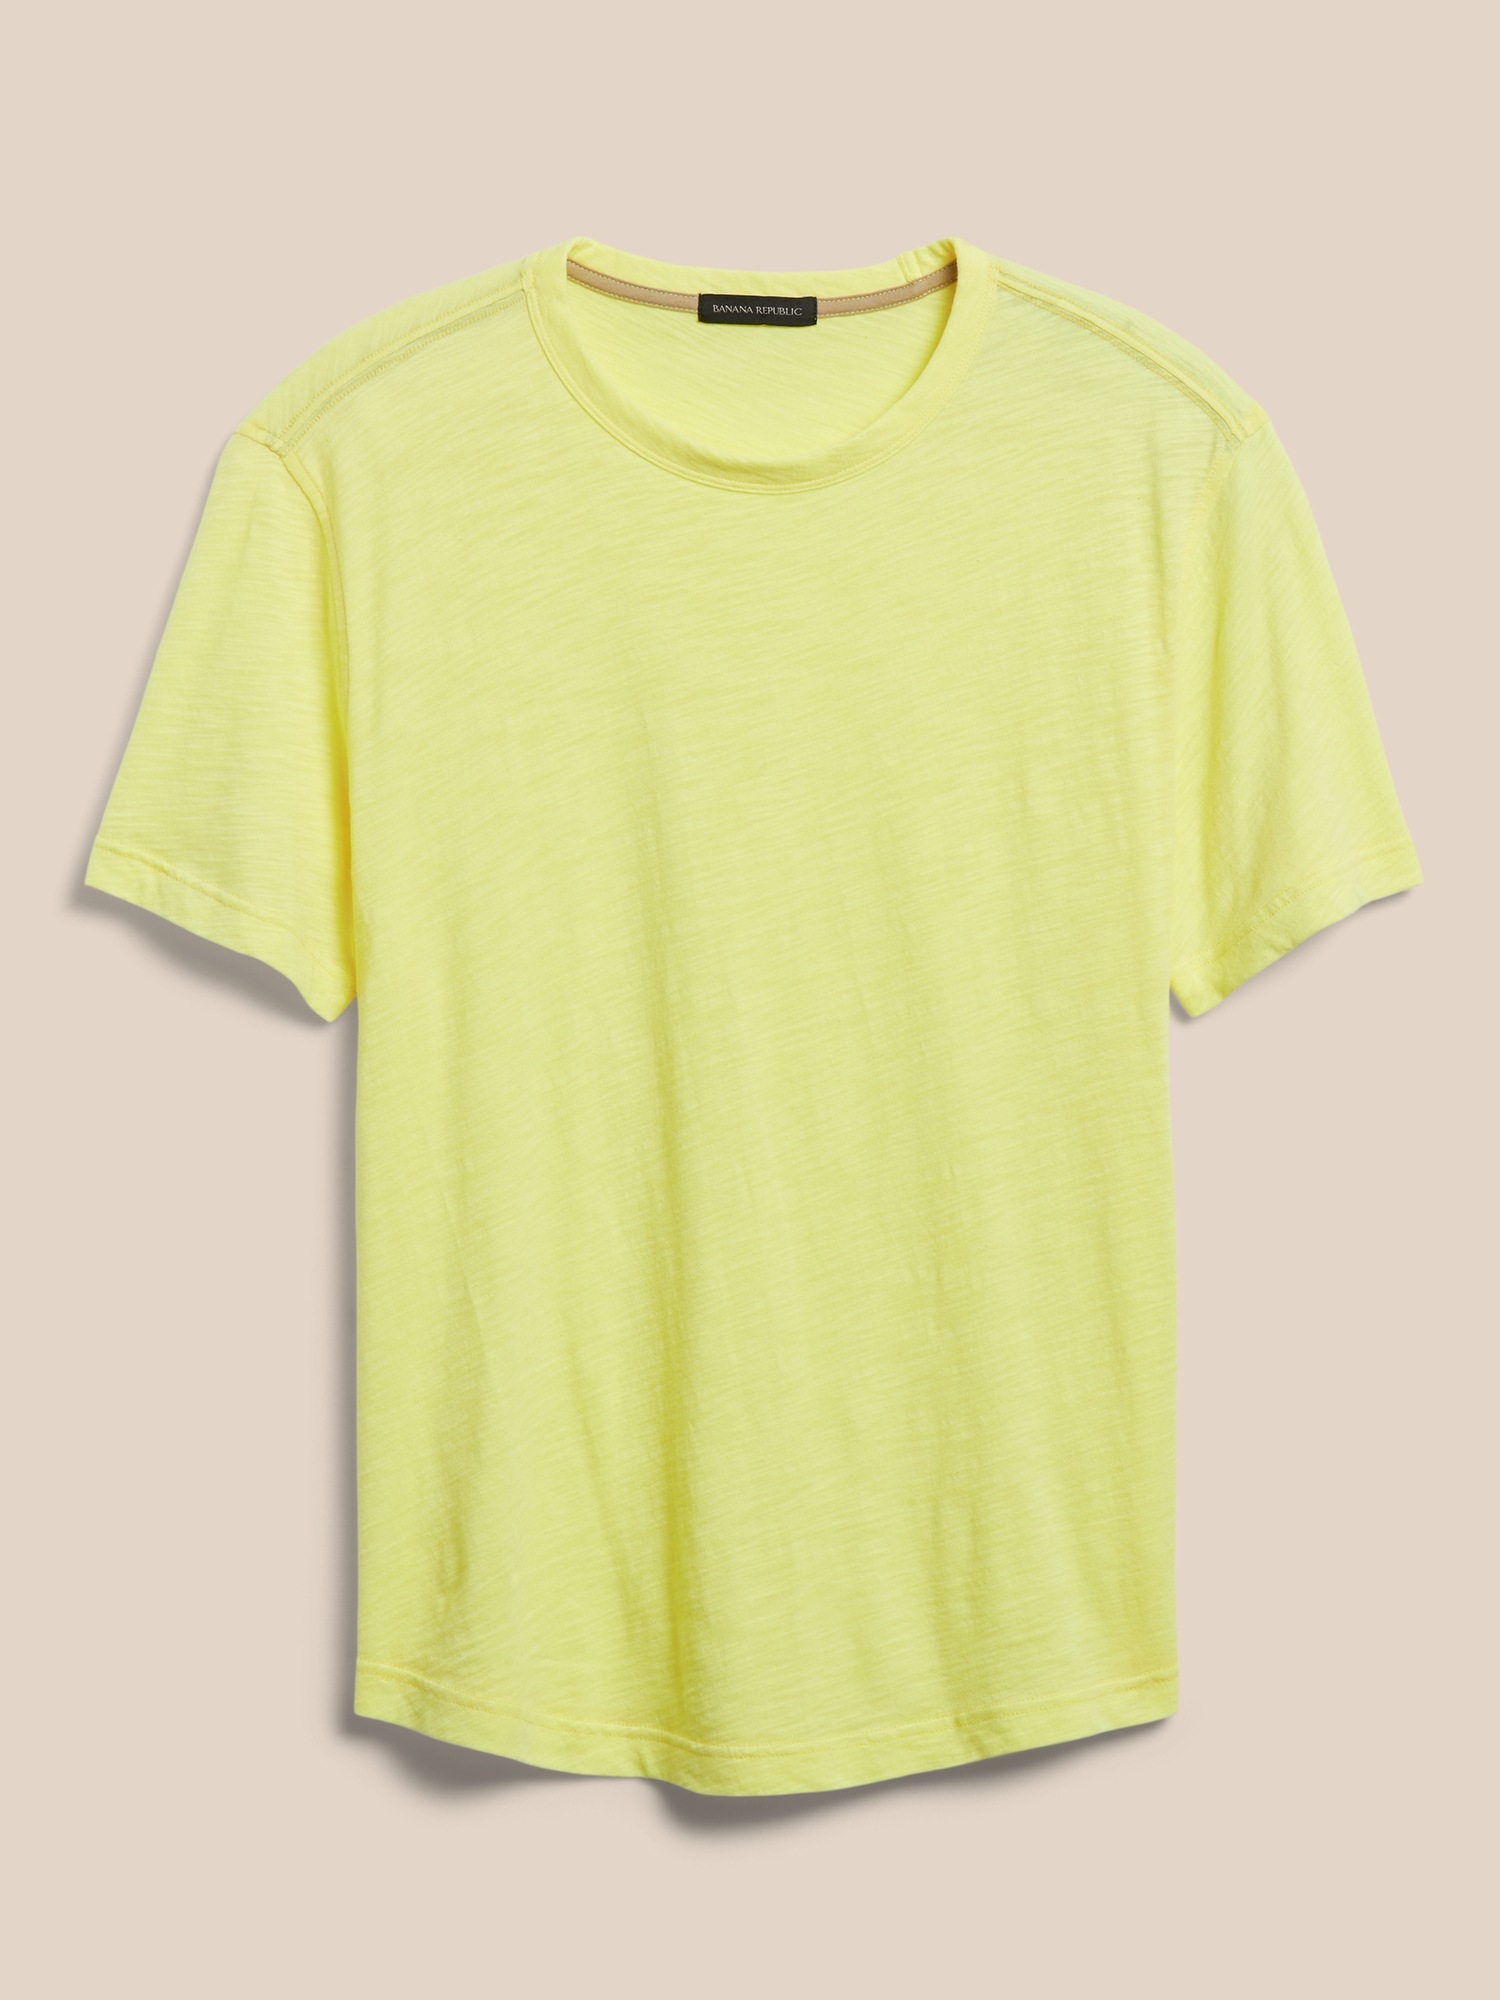 New Men's Size Banana Republic Forest Green Soft Wash Crew Neck T-Shirt NWOT M 